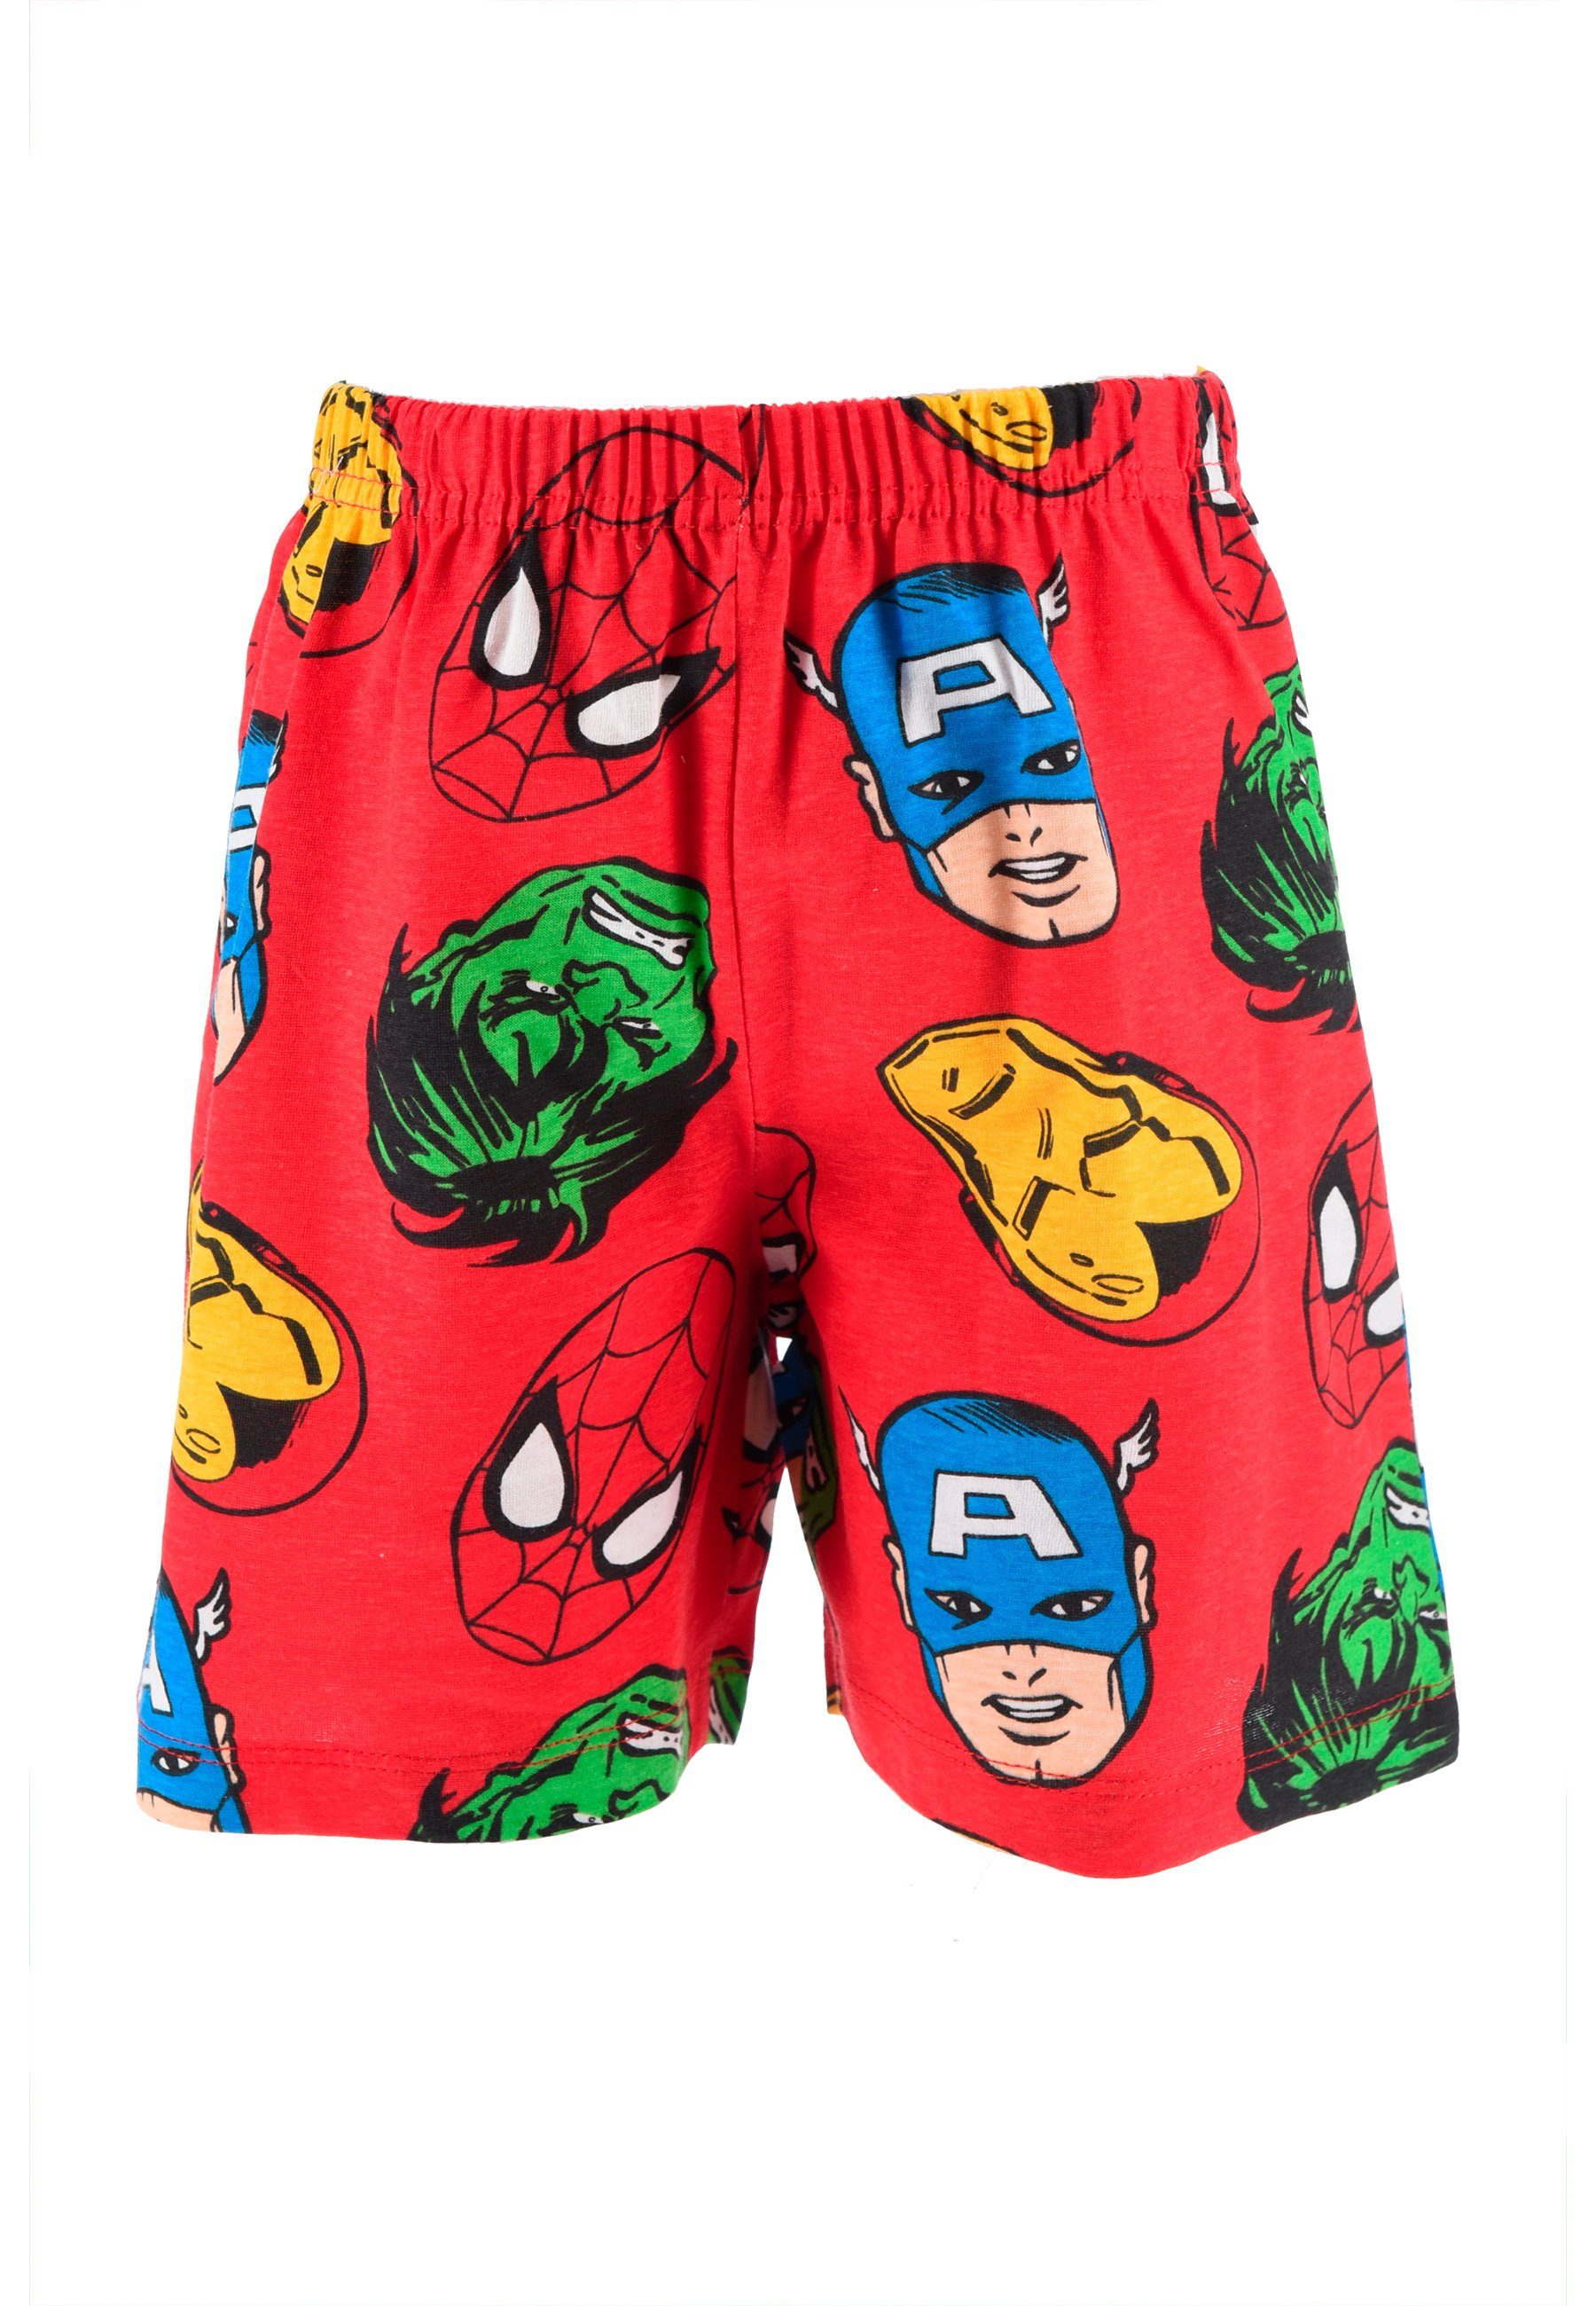 Hulk The Shorty tlg) Pyjama Captain America AVENGERS Jungen Man Schlaf-Set Kinder (2 Iron